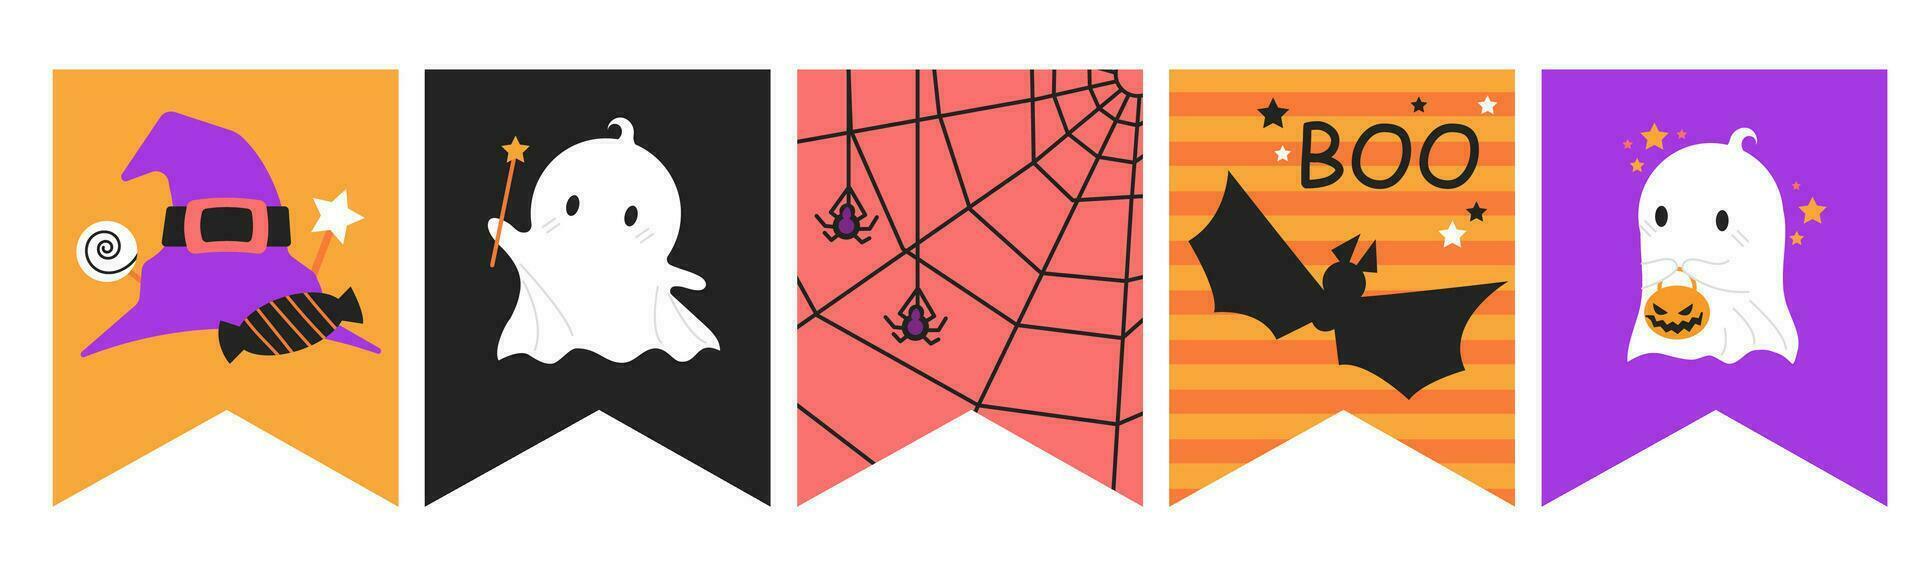 cartone animato fantasma Halloween pavese design. 5 luminosa bandiera forme con spaventoso arredamento. vettore